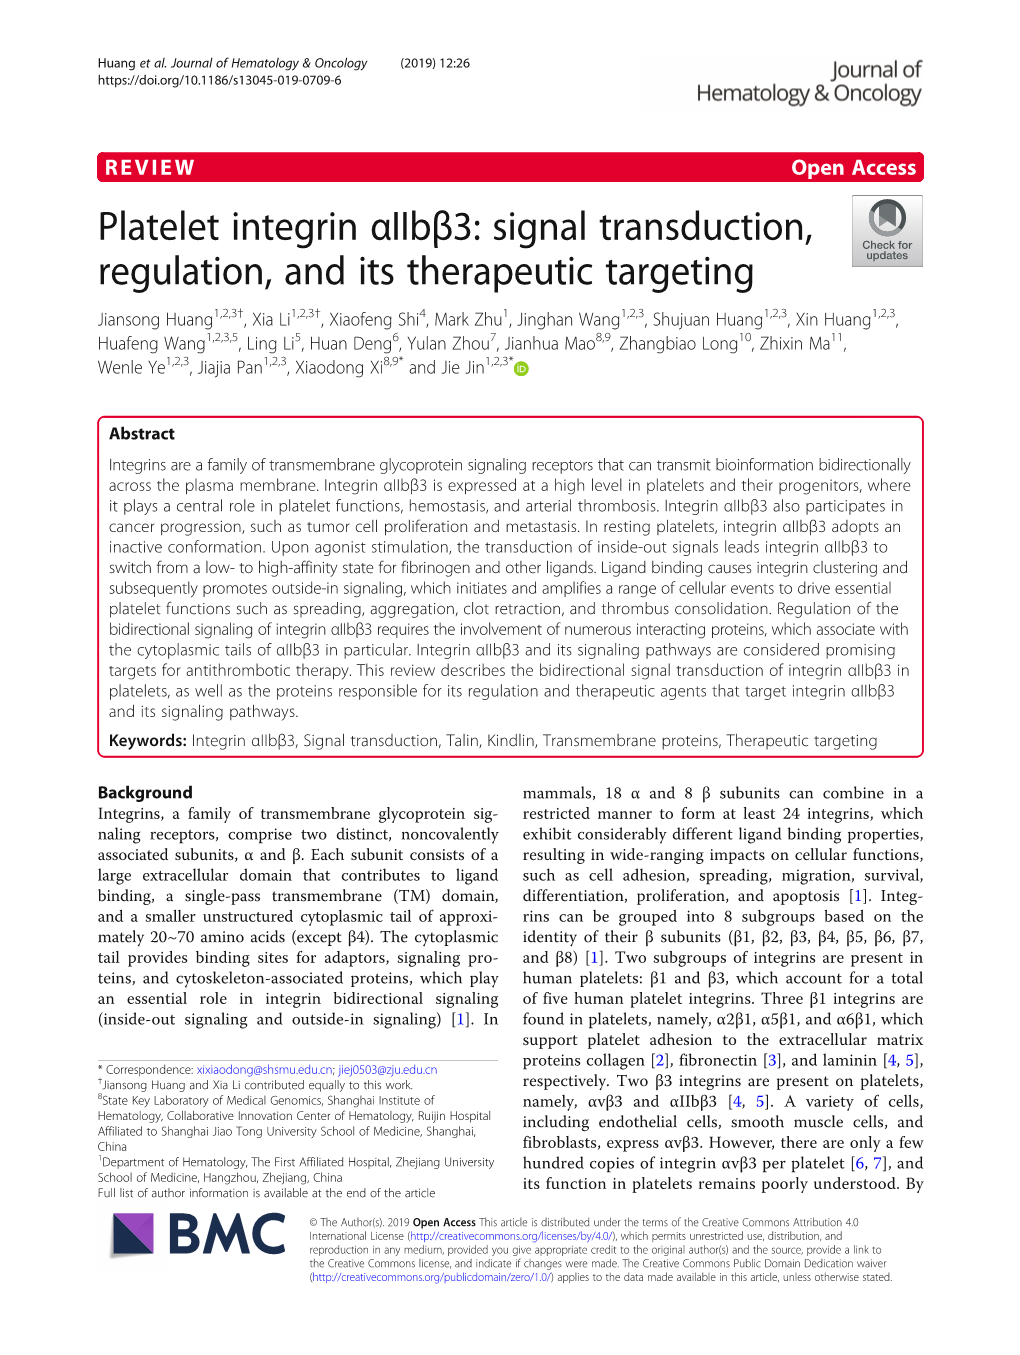 Platelet Integrin Αiibβ3: Signal Transduction, Regulation, and Its